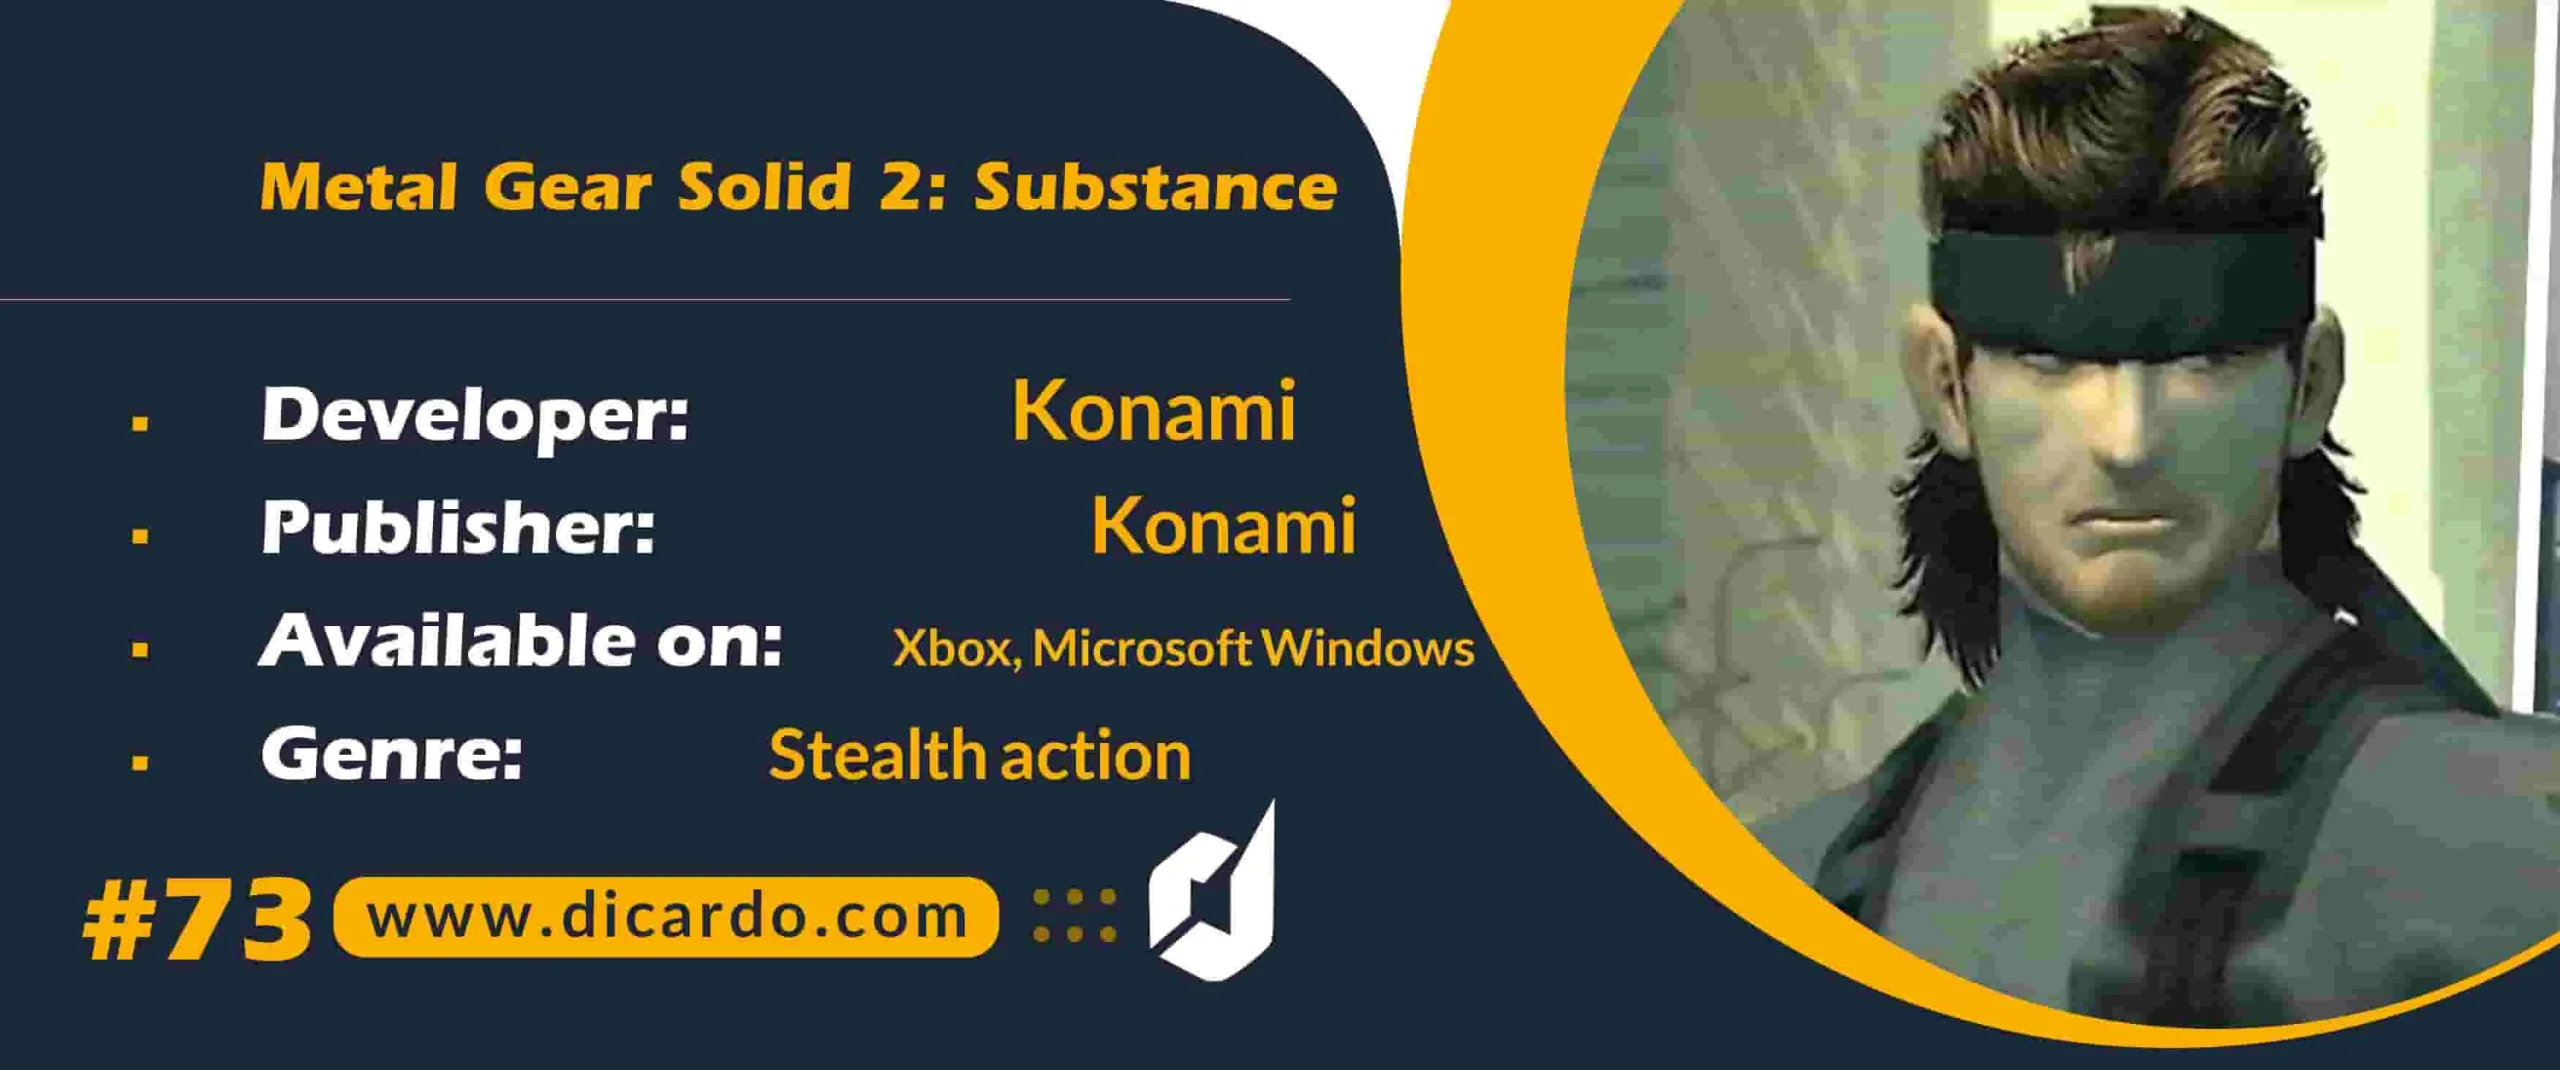 #73 متال گر سالید 2 سابستنس Metal Gear Solid 2: Substance